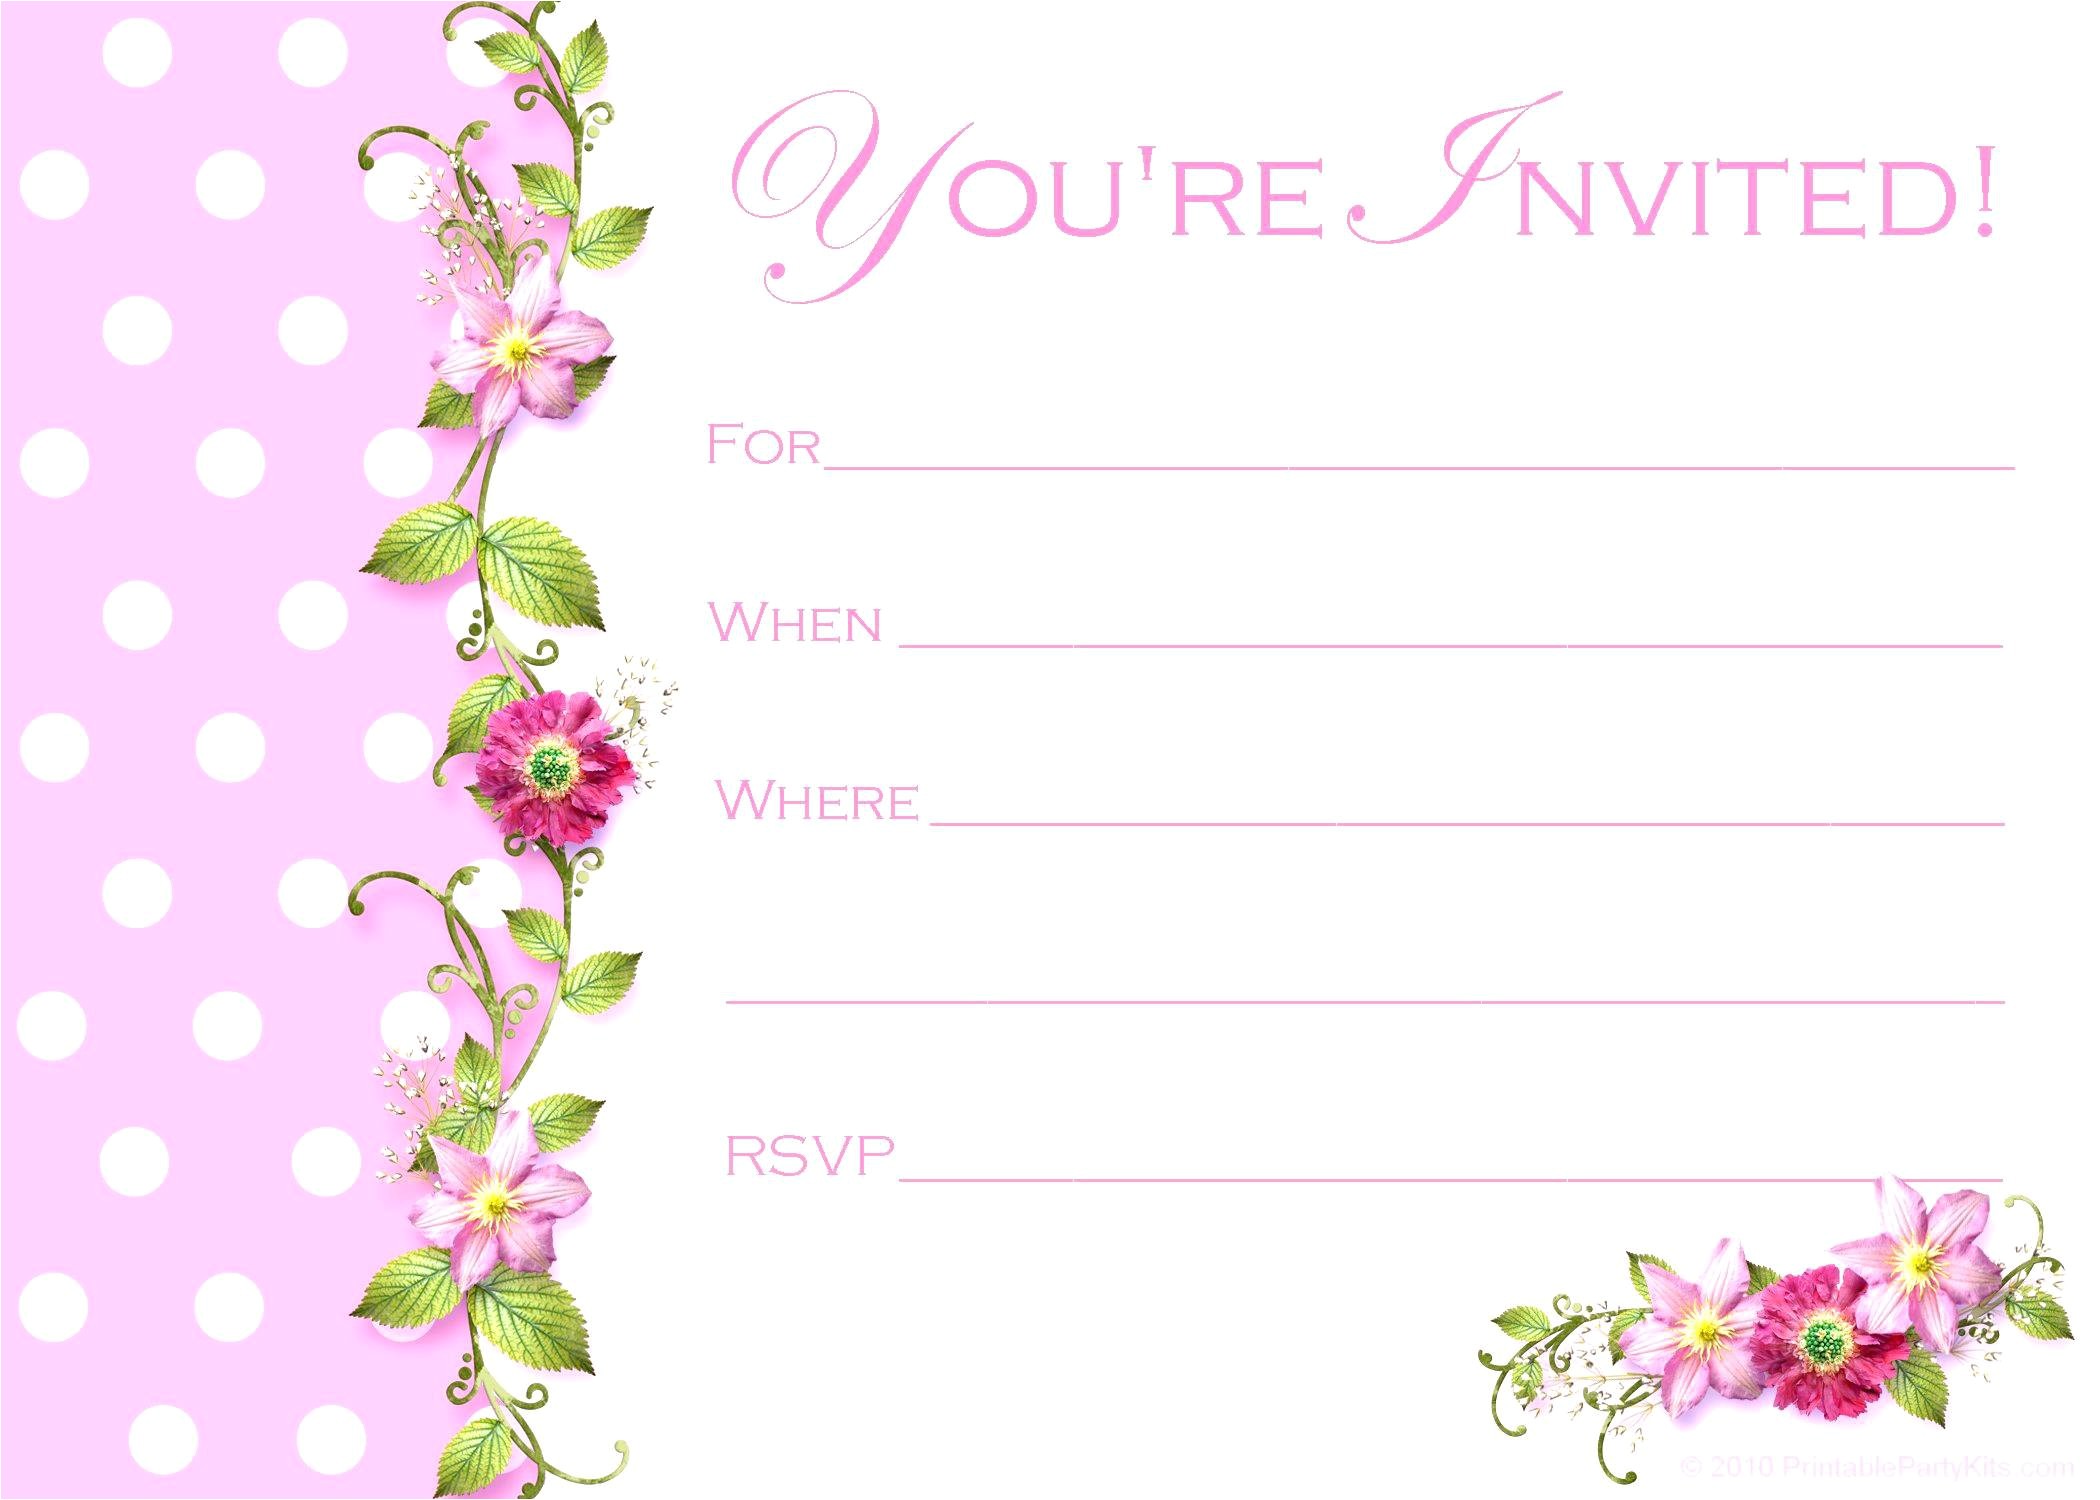 birthday invitation card template